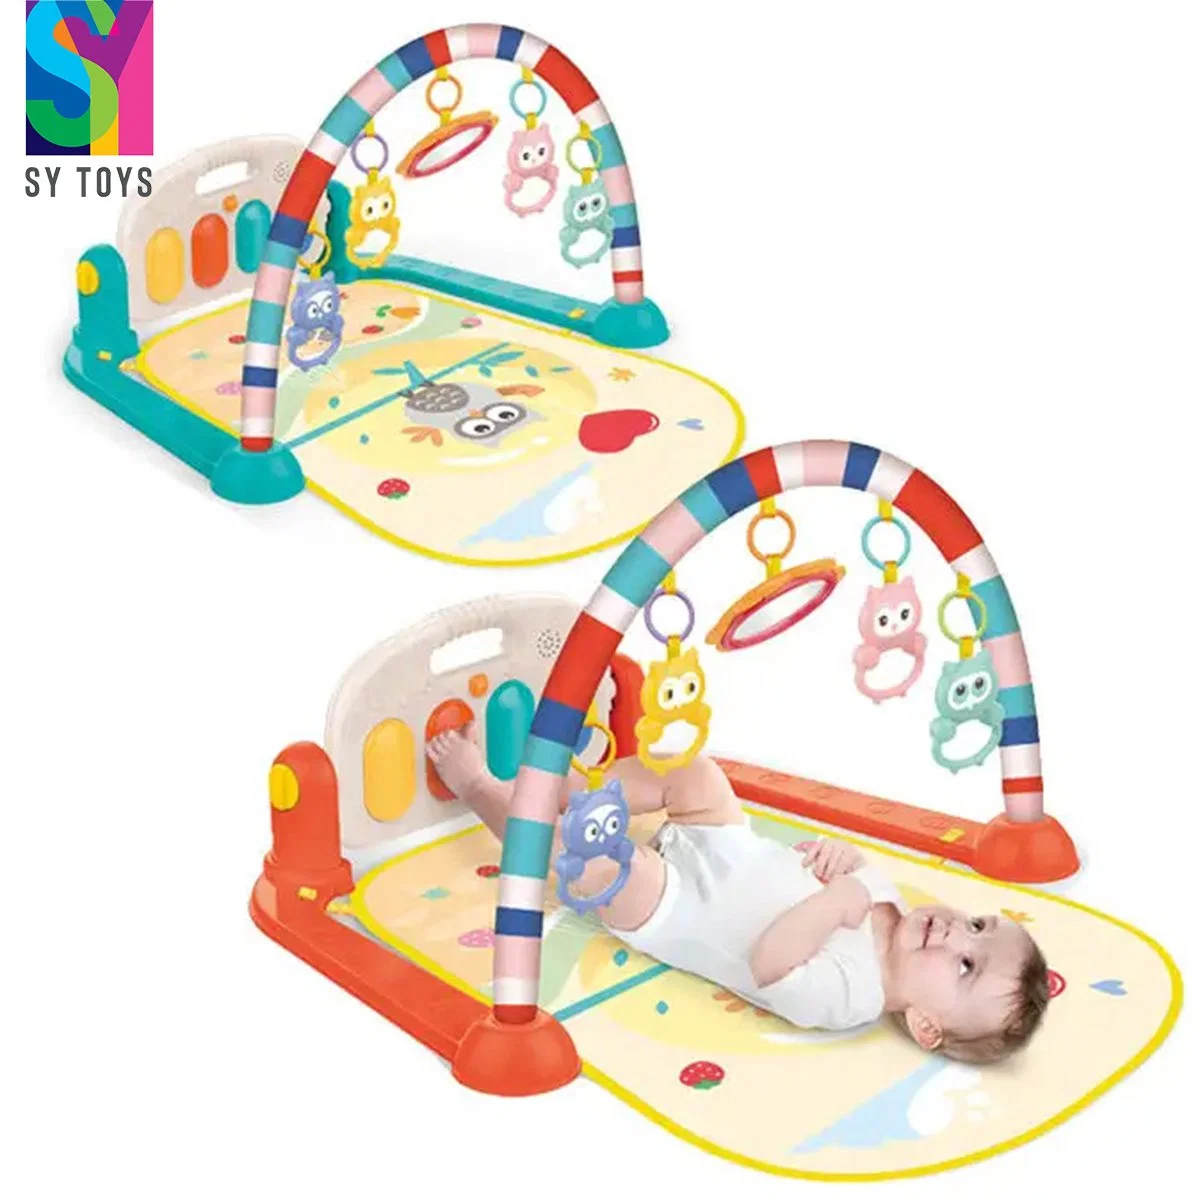 Sy Toys Supply Baby Play Gym Time Padded Mat Gyms Play Mats Kick Play Piano Musical Activity Mat